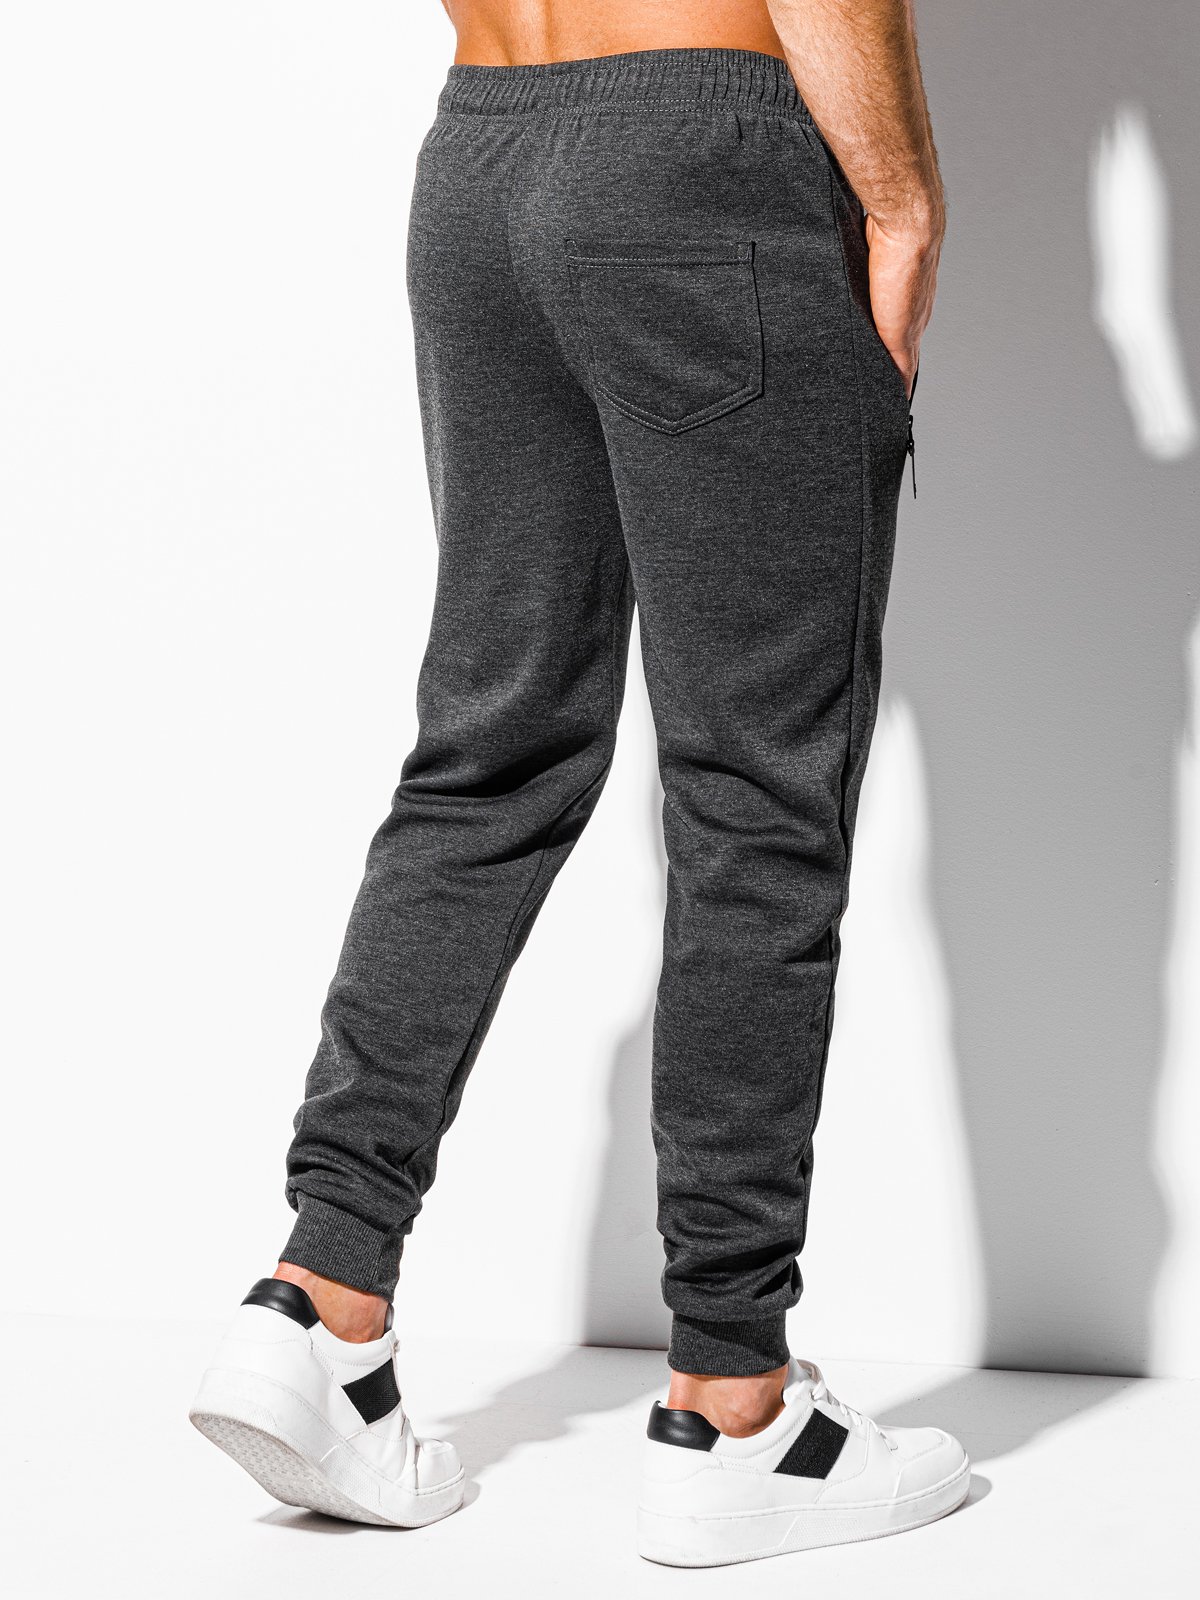 Men's sweatpants P1050 - dark grey  MODONE wholesale - Clothing For Men